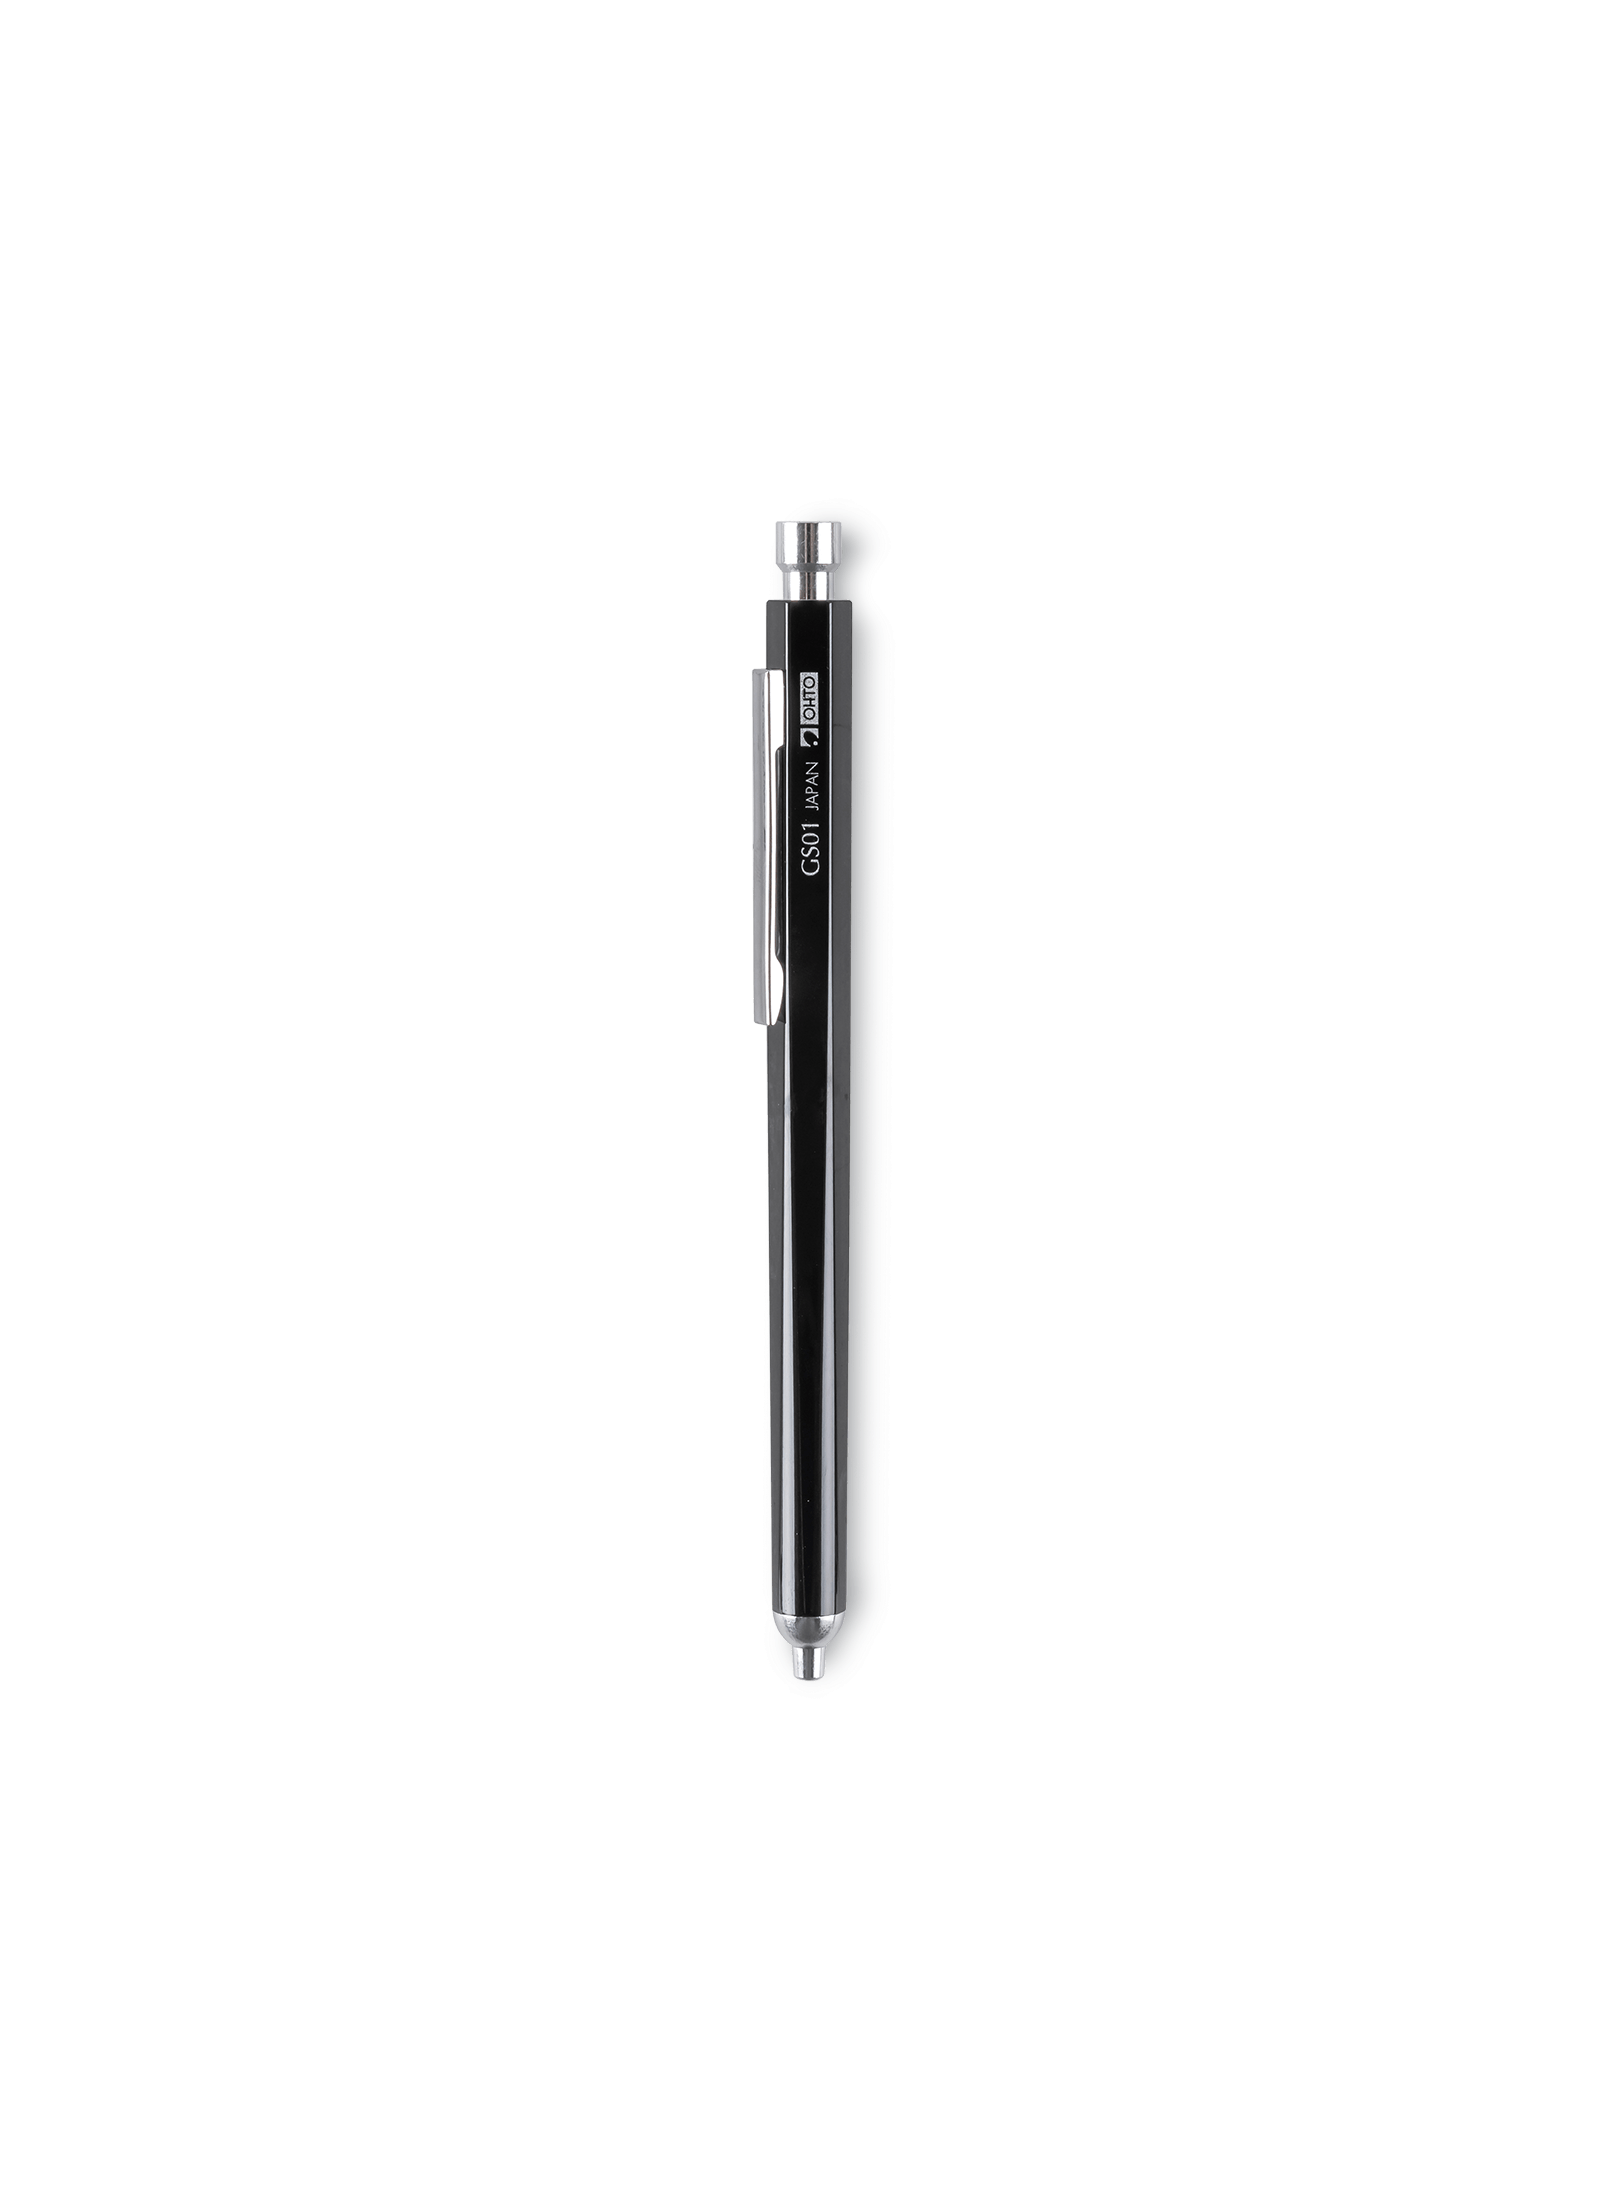 Horizon Ballpoint Pen in Black || Black